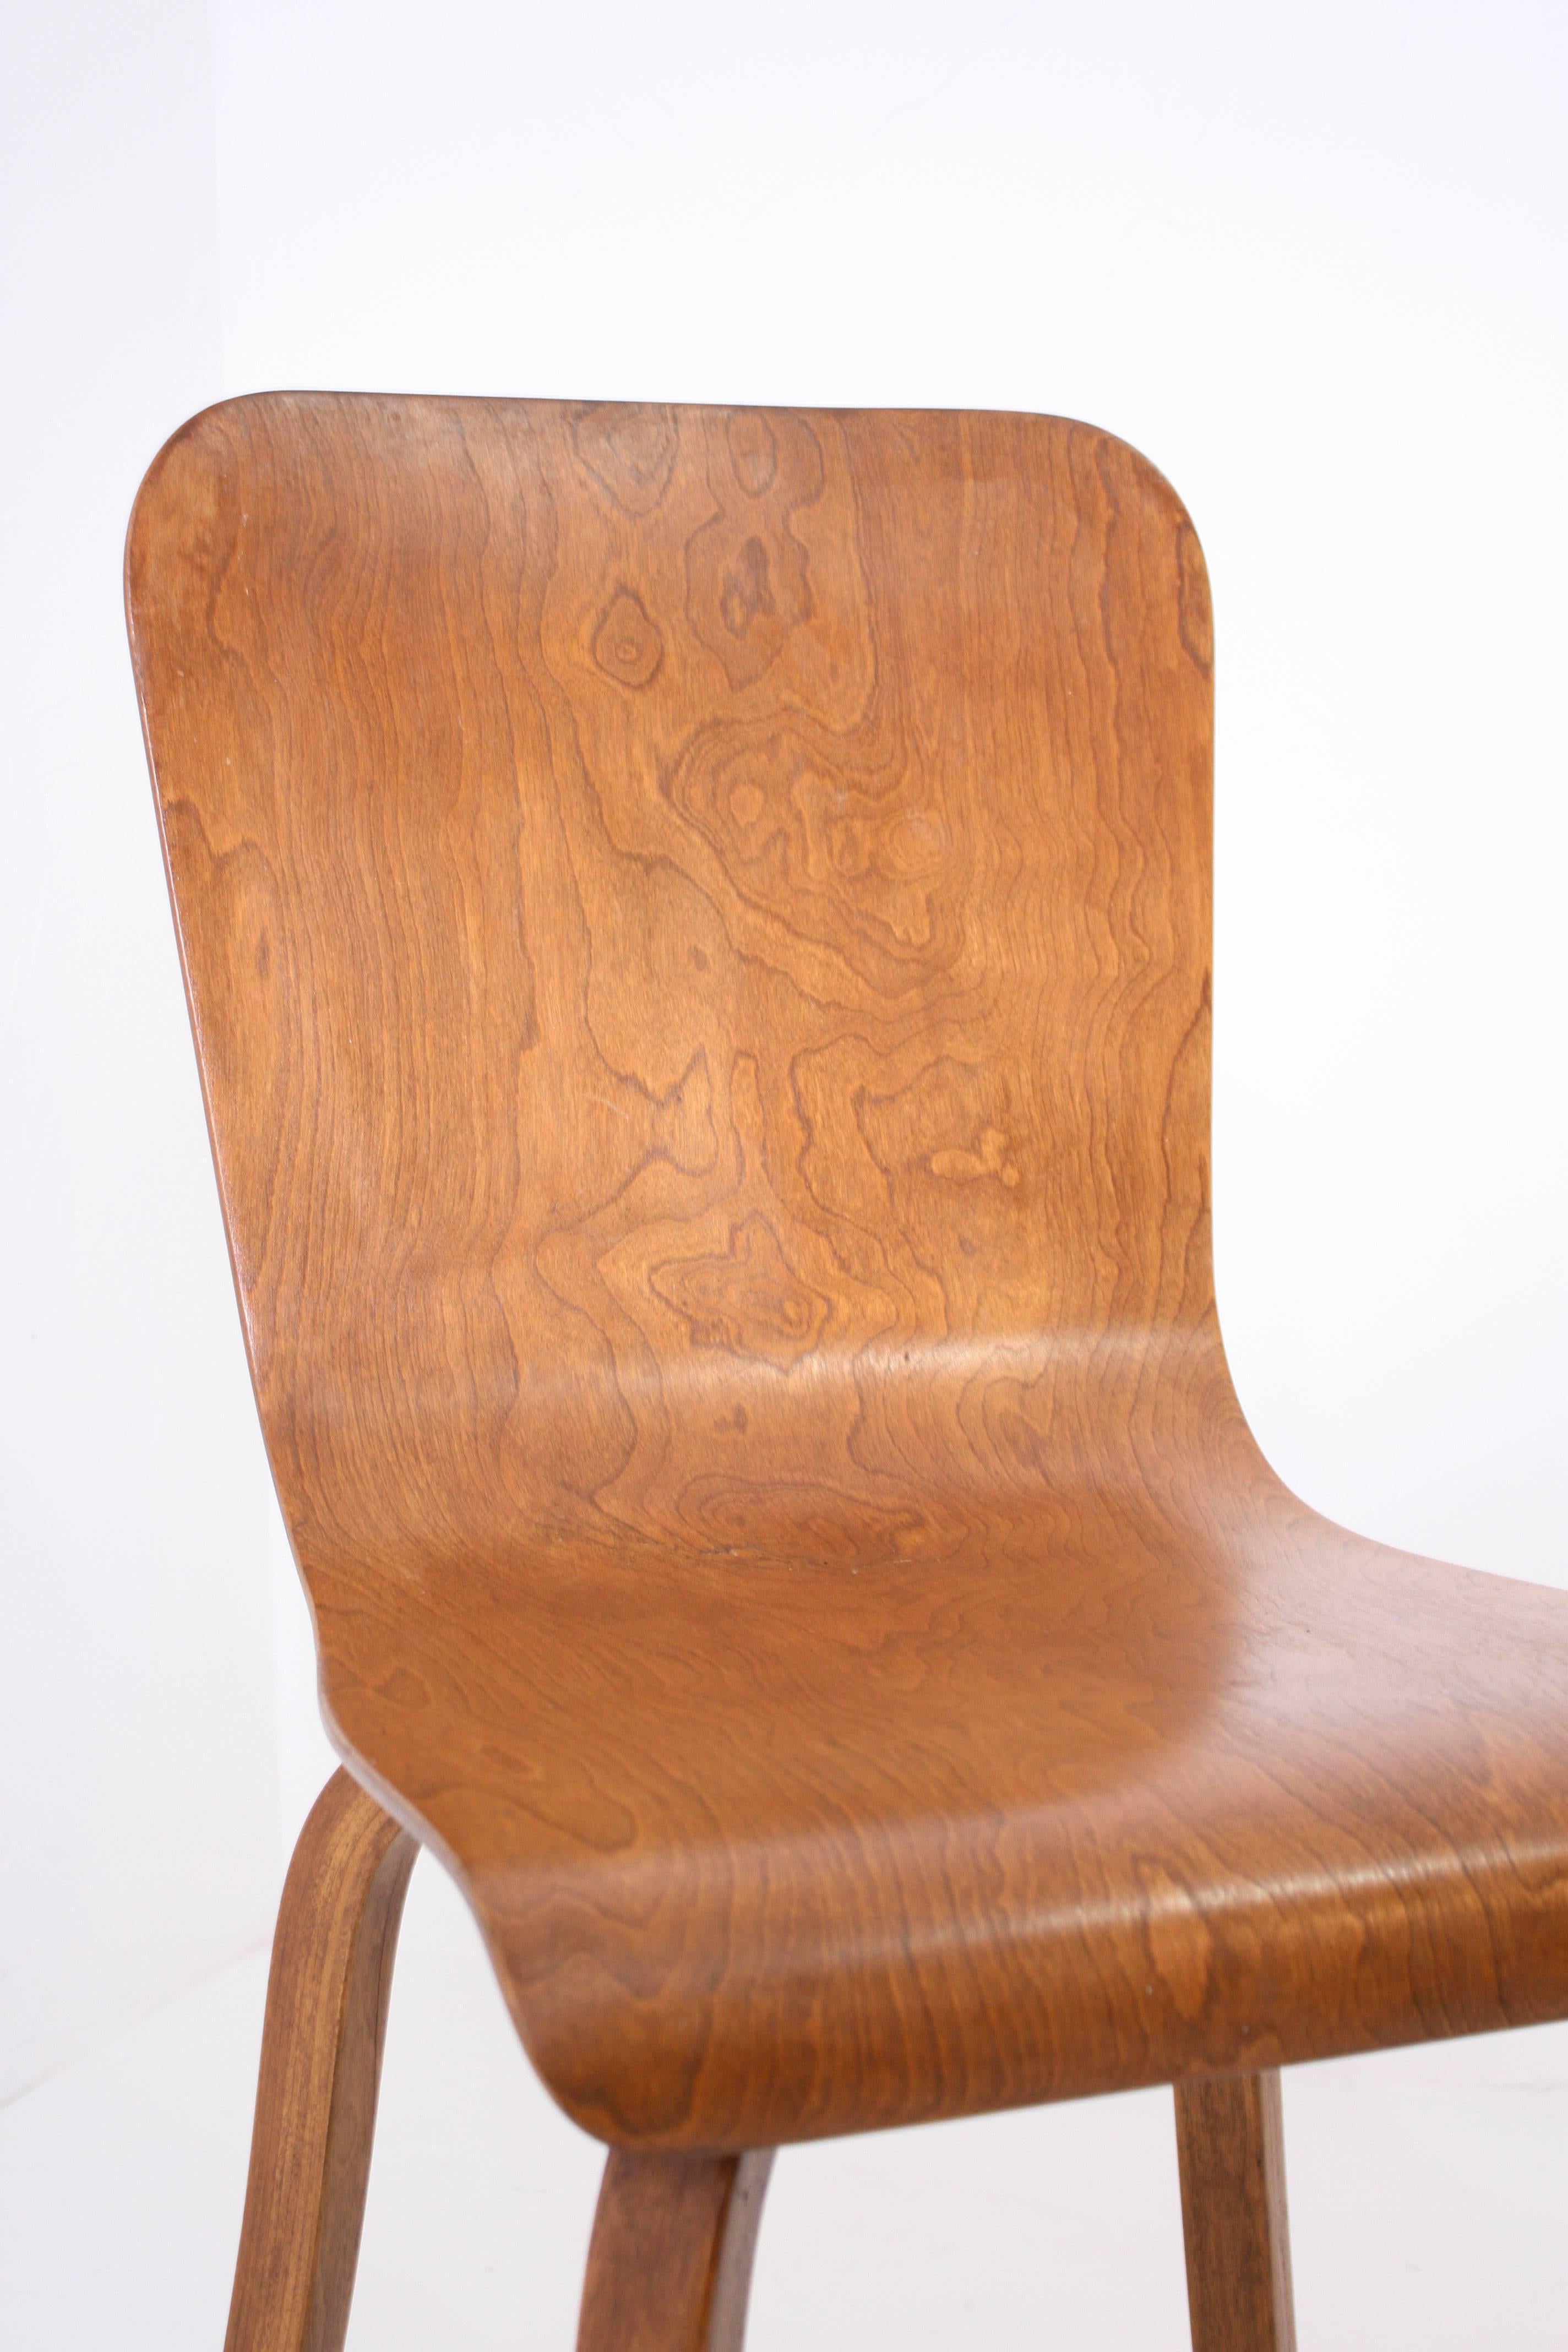 Mid-20th Century Bentwood Side Chair by Czerwinski-Stylolt